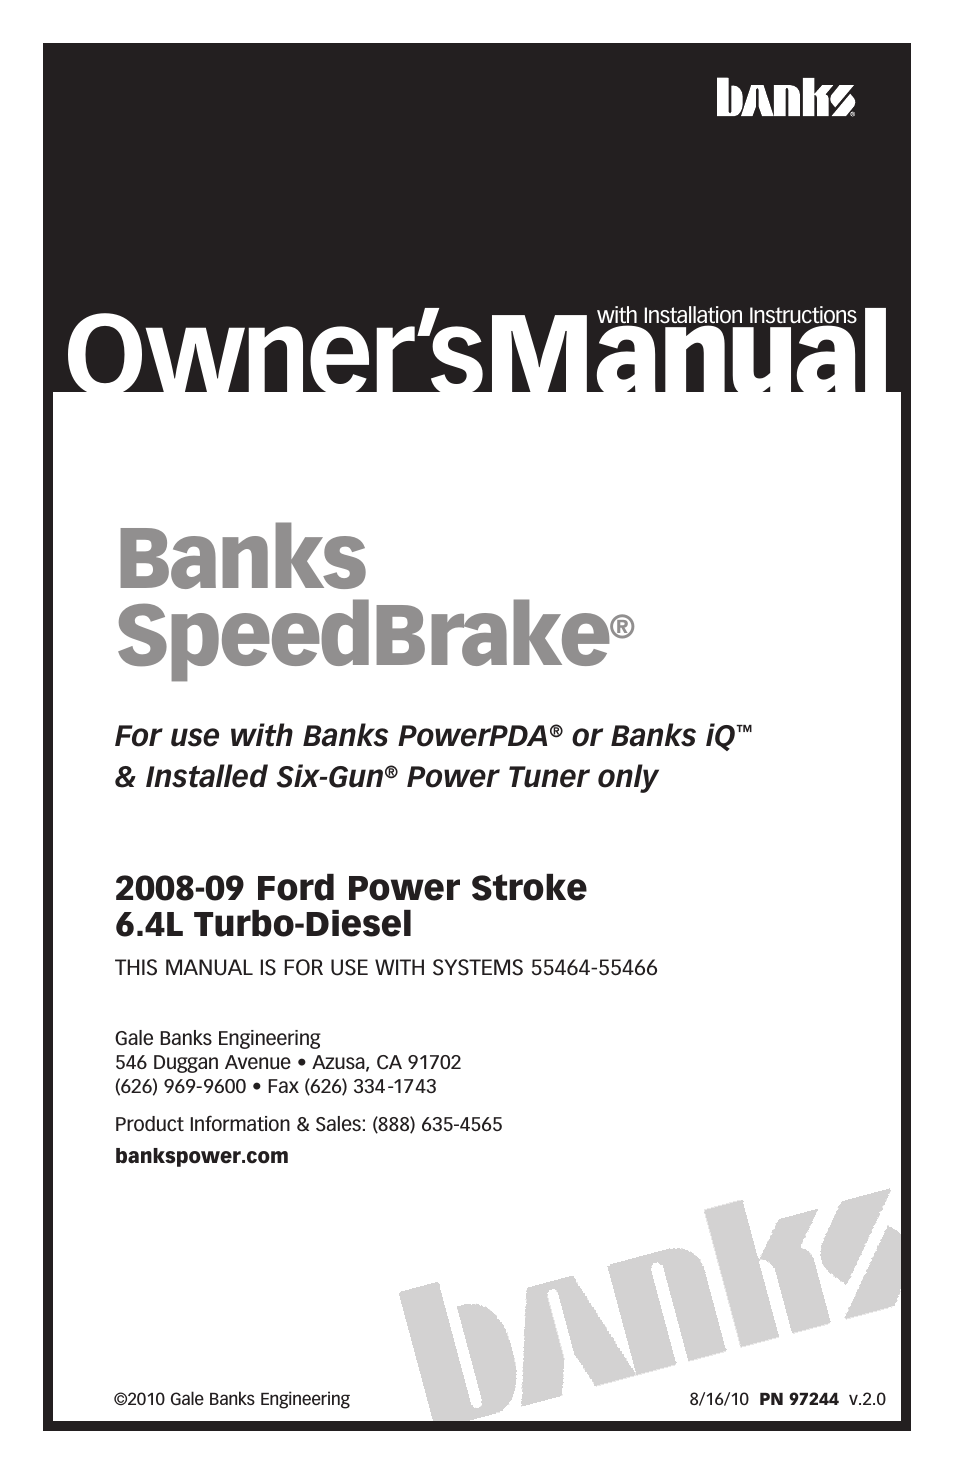 Ford Trucks: (Diesel ’08 - 10 6.4L Power Stroke) Speed Control- SpeedBrake '08-09  For use with PowerPDA & Banks iQ